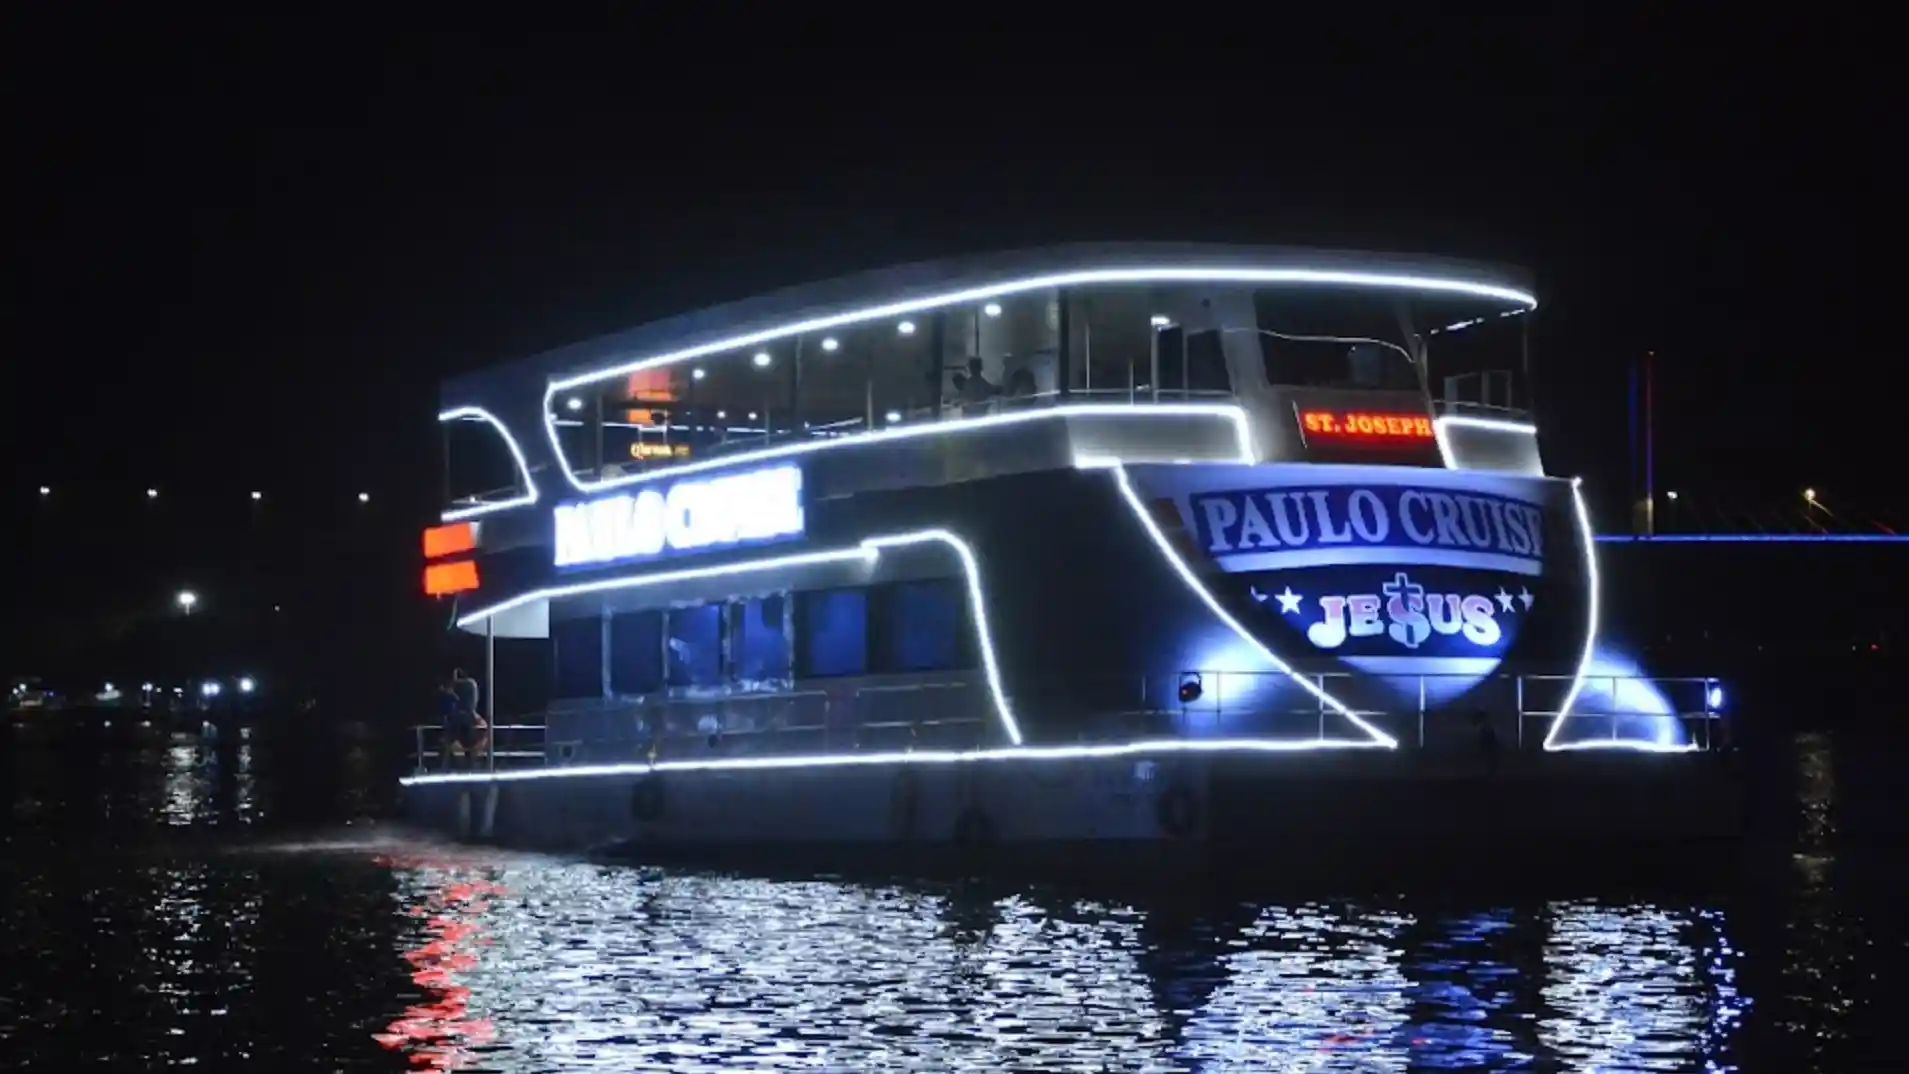 Mandovi River Cruise by Paulo Cruises